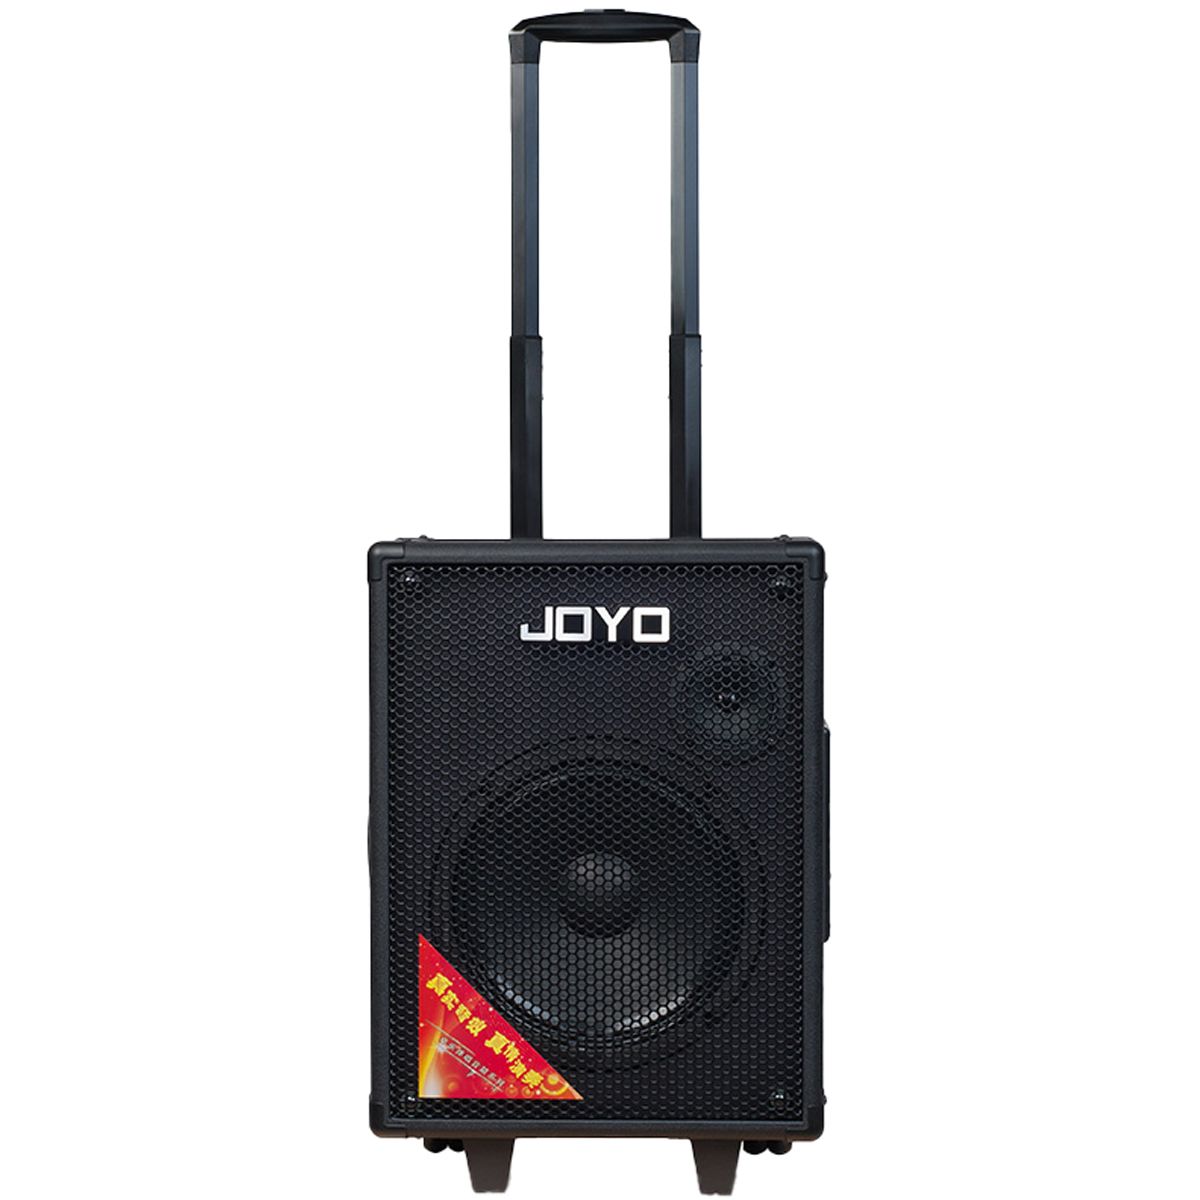 Joyo JPA-863 transportabelt anlæg m/ 2 x trådløs mikrofon